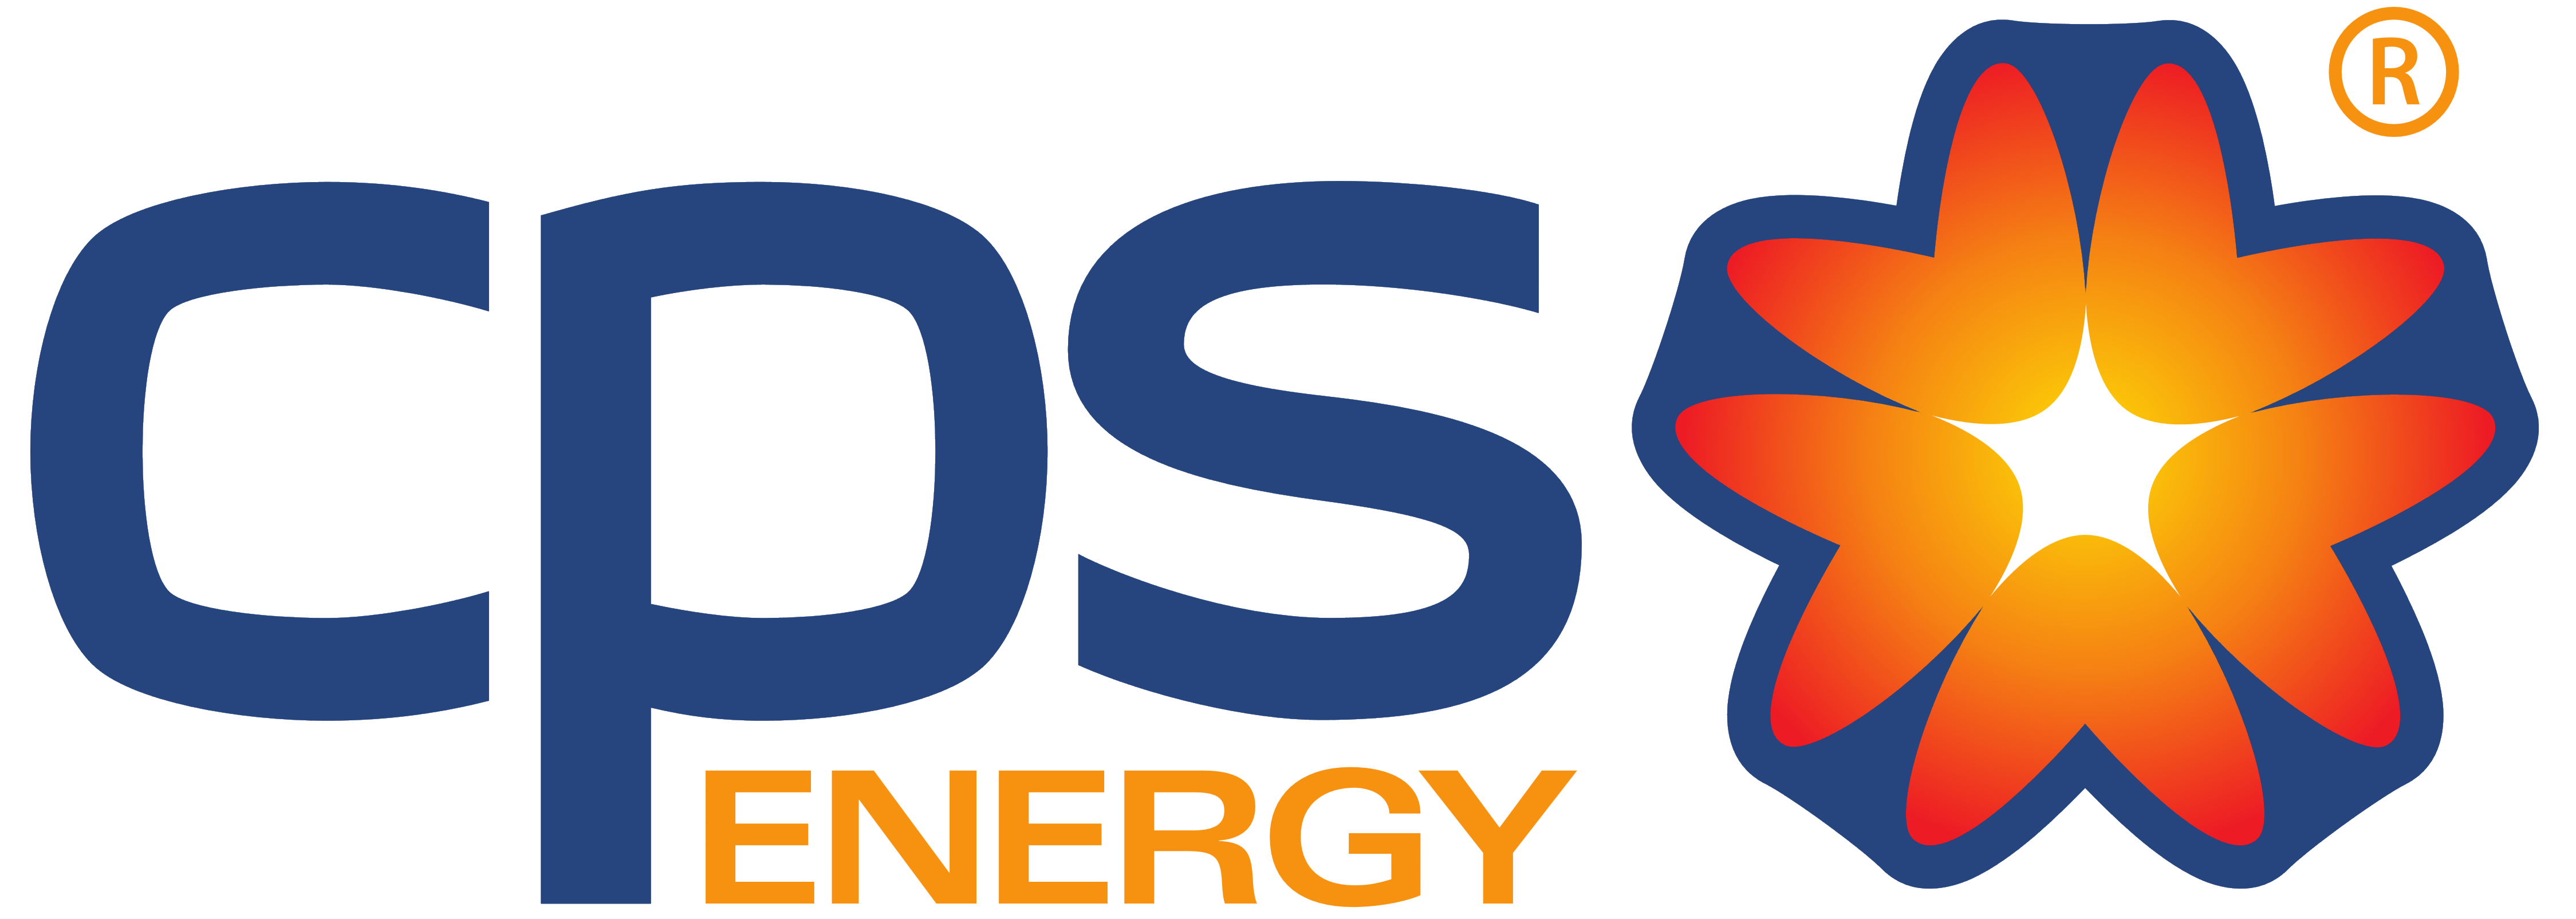 cps-energy-logos-download